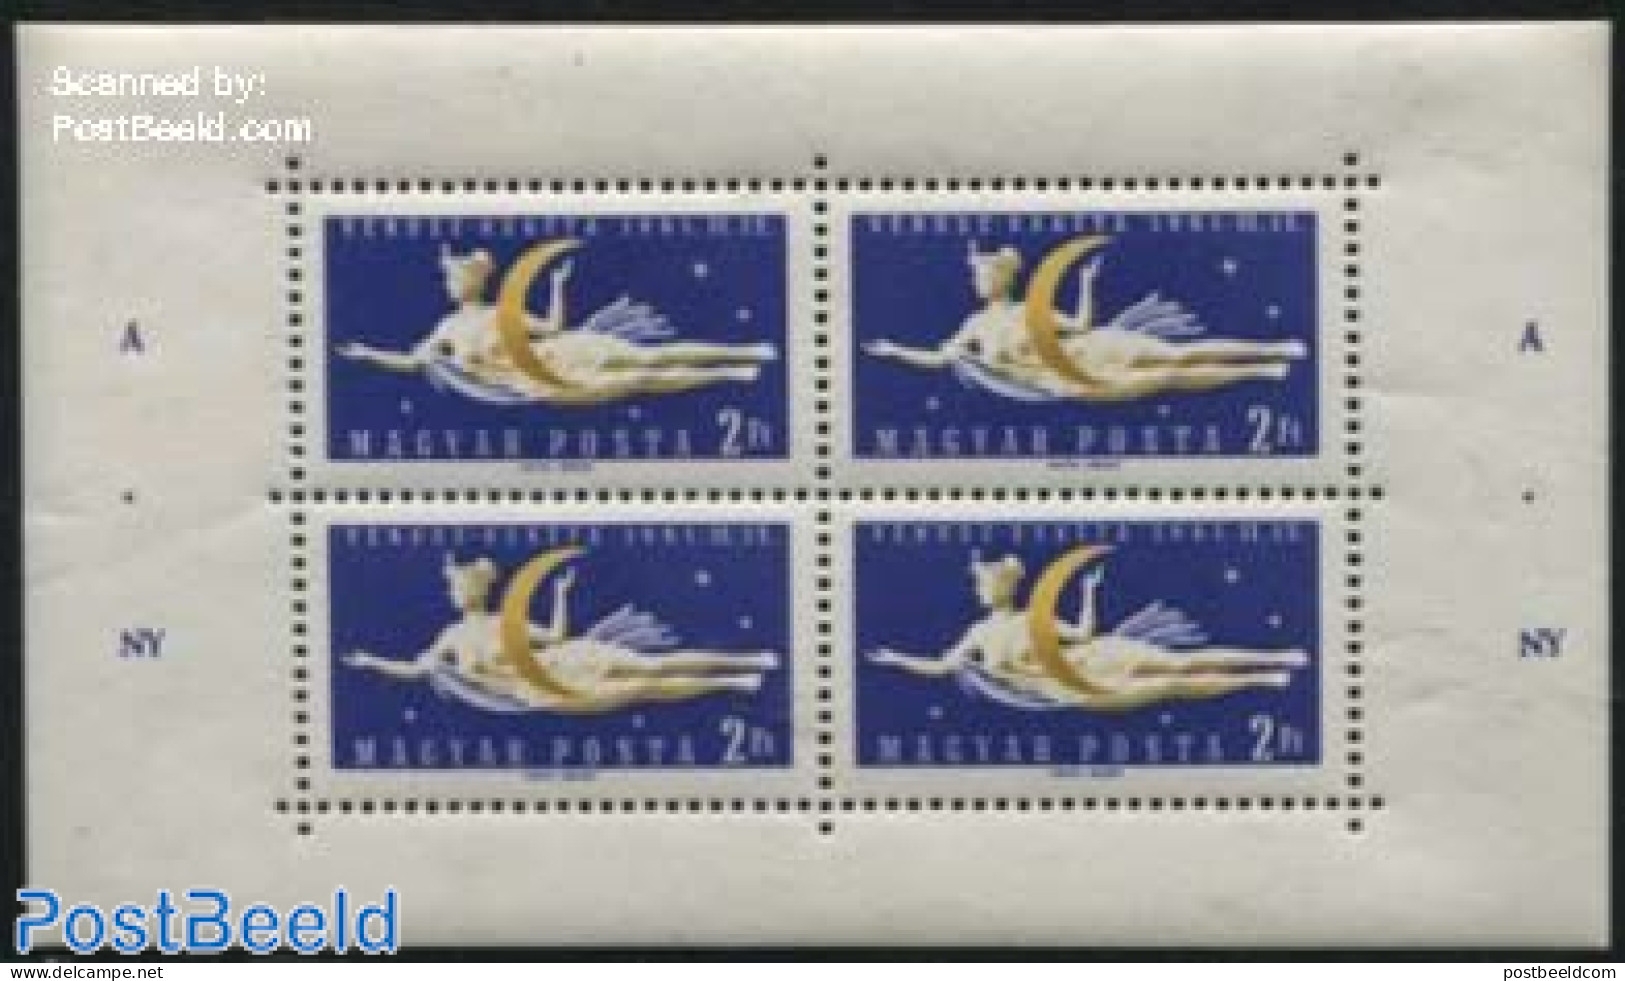 Hungary 1961 Venus Rocket S/s, Mint NH, Transport - Space Exploration - Unused Stamps